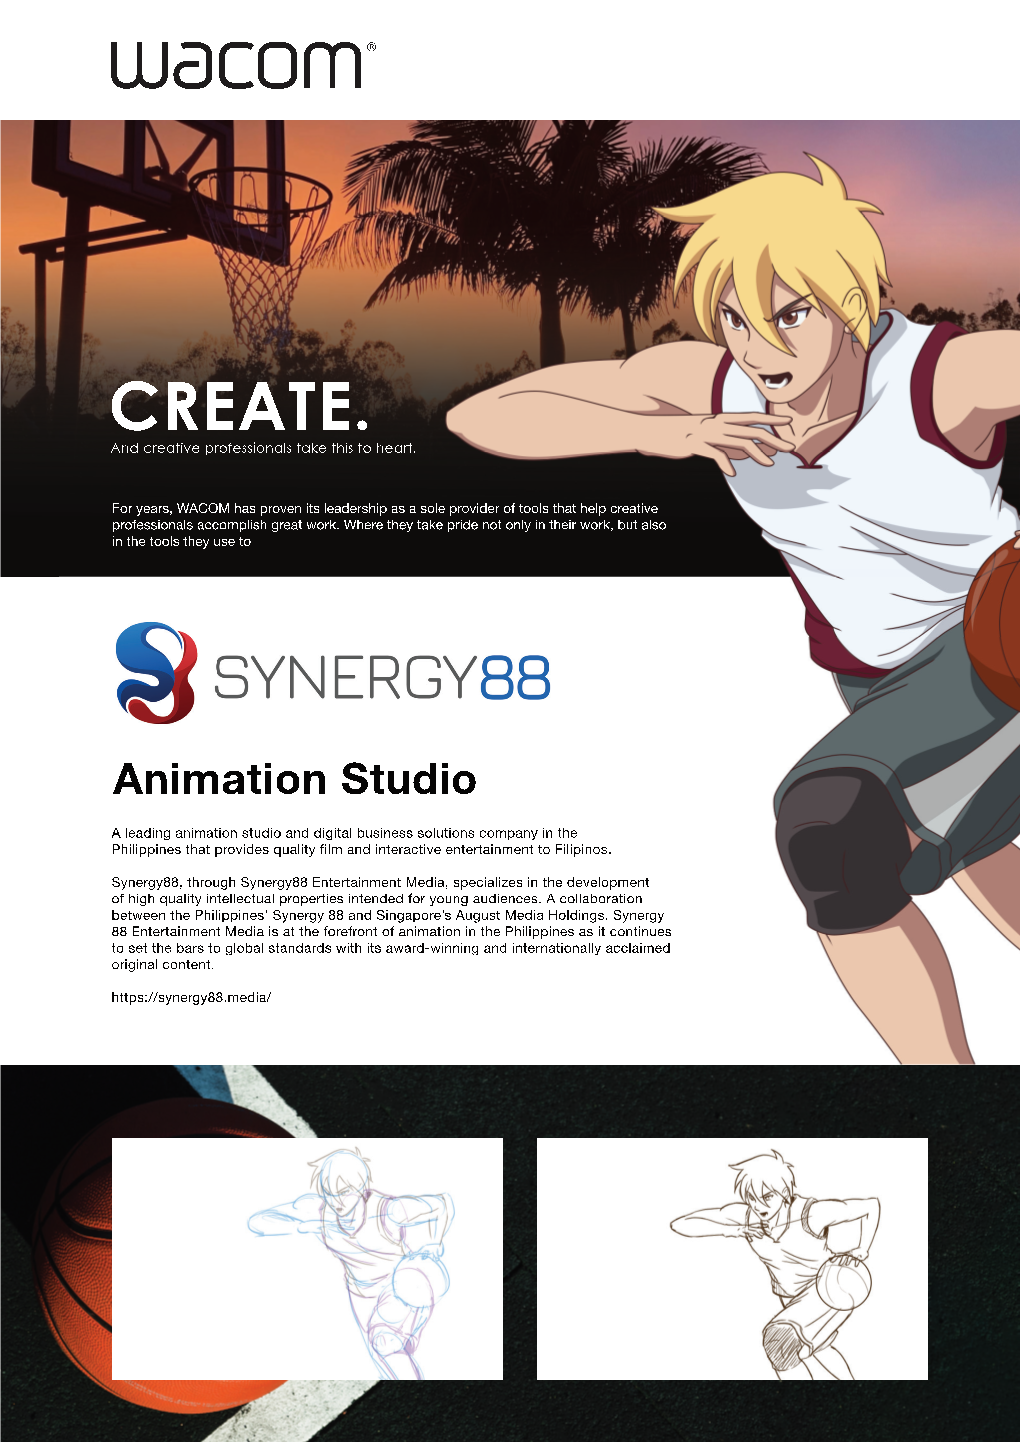 Animation Studio CREATE